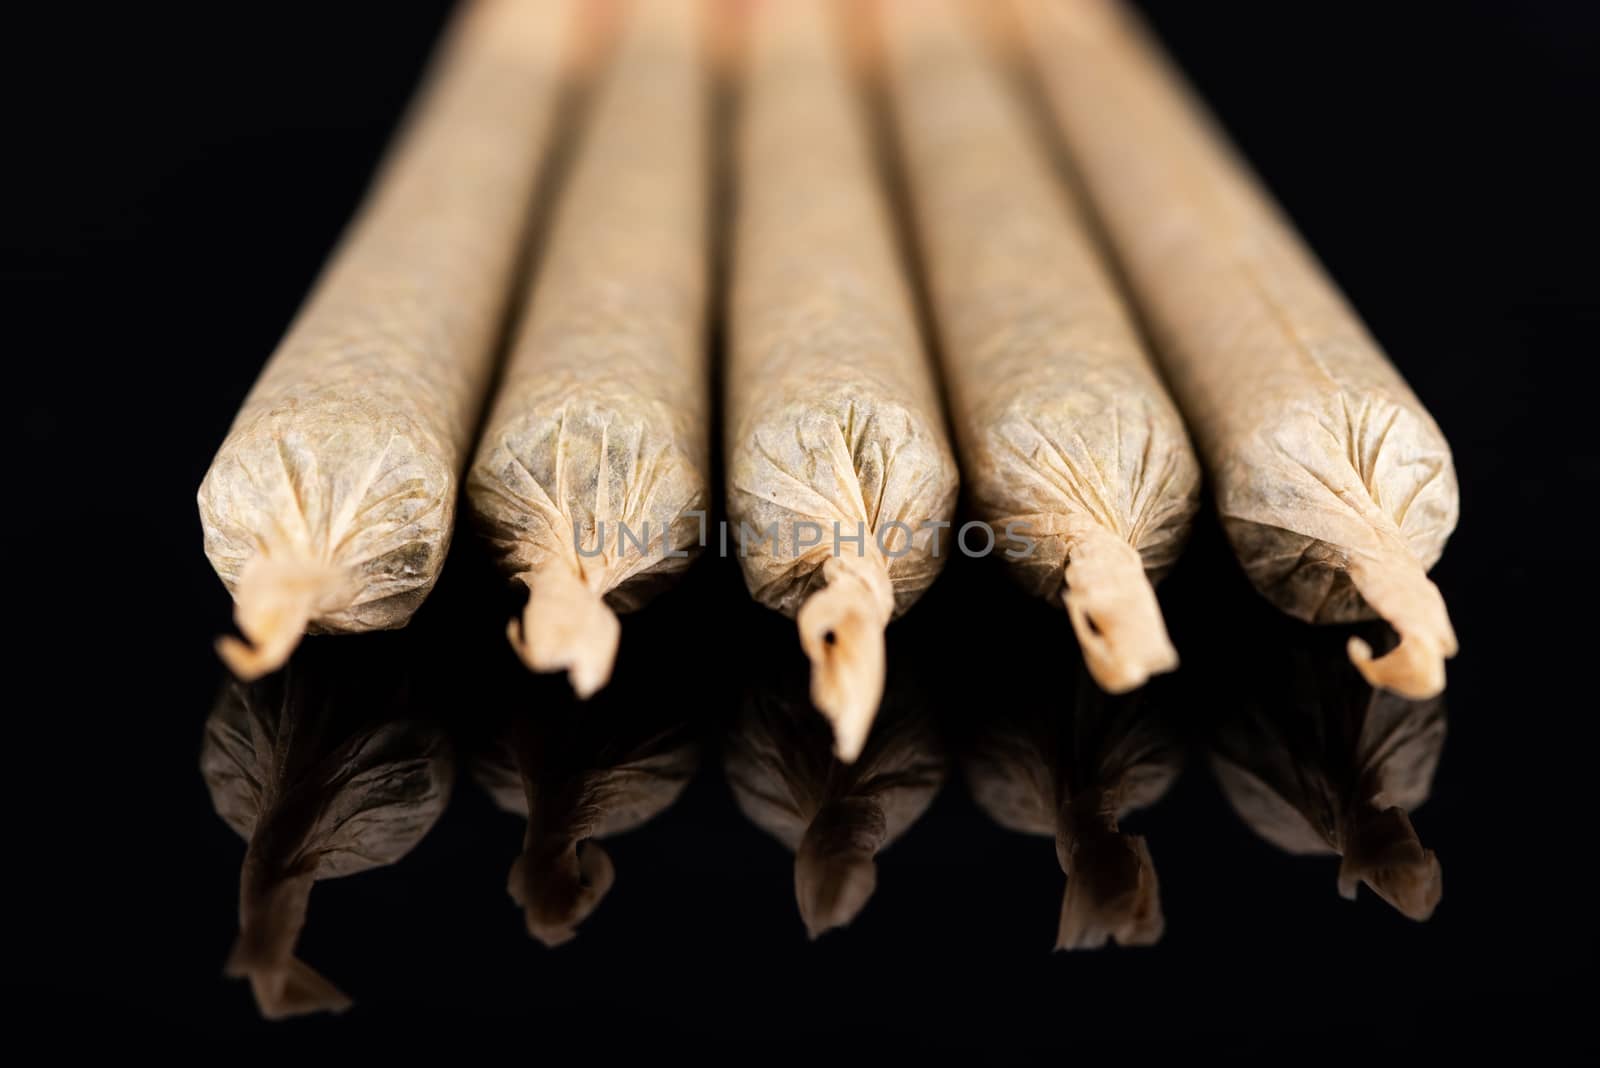 Cannabis Marijuana Rolled in Joints on Dark Reflective Backgroun by merc67